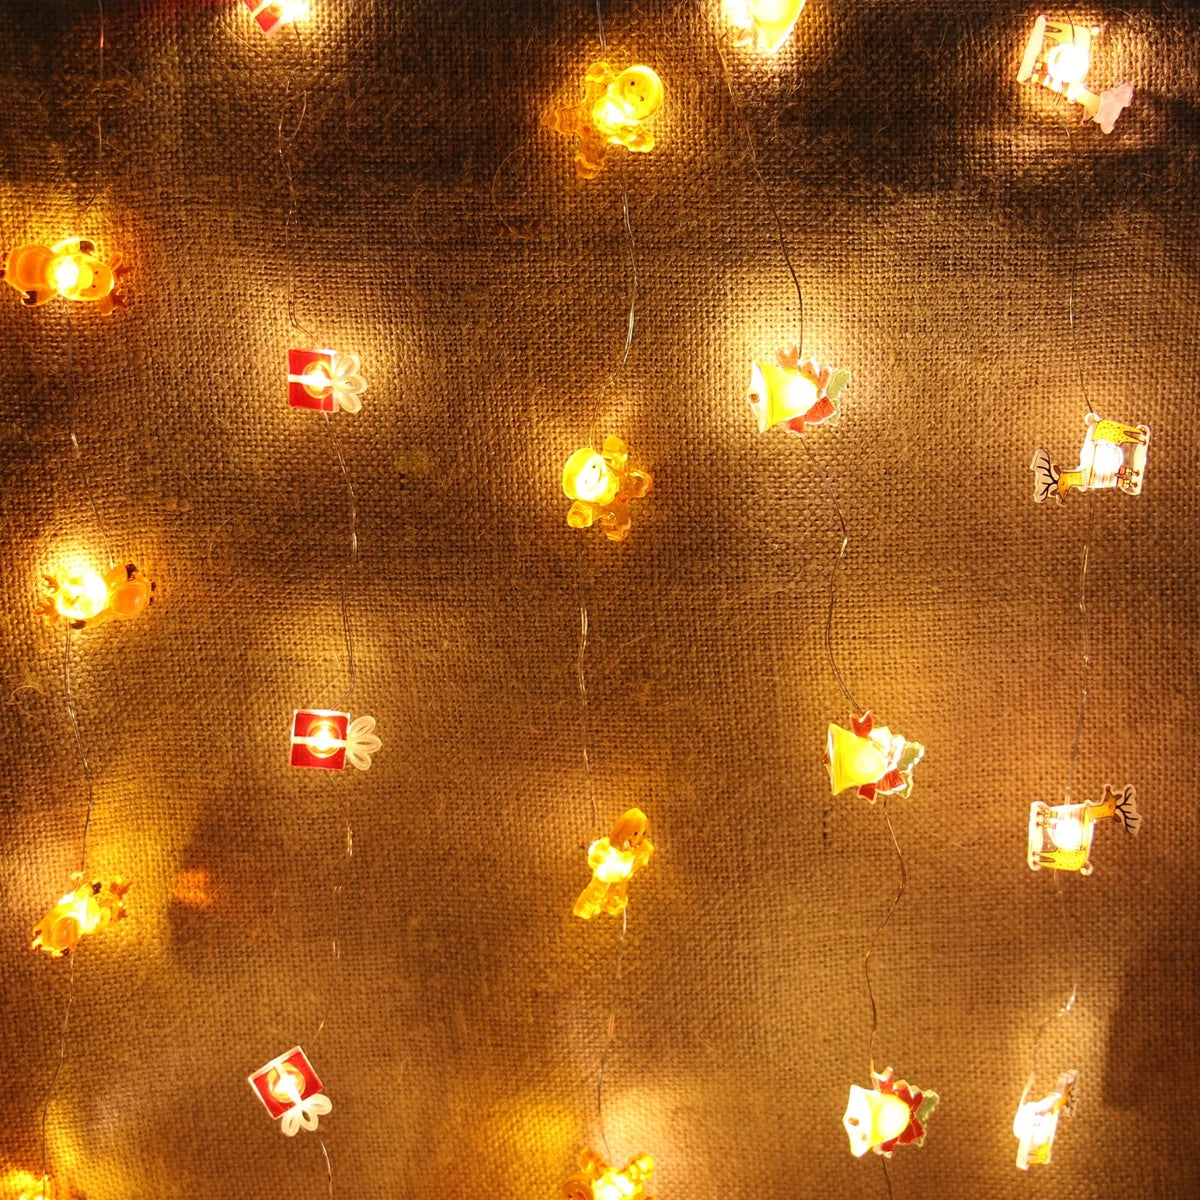 2M-LED Festive Holiday Decor String Lighting